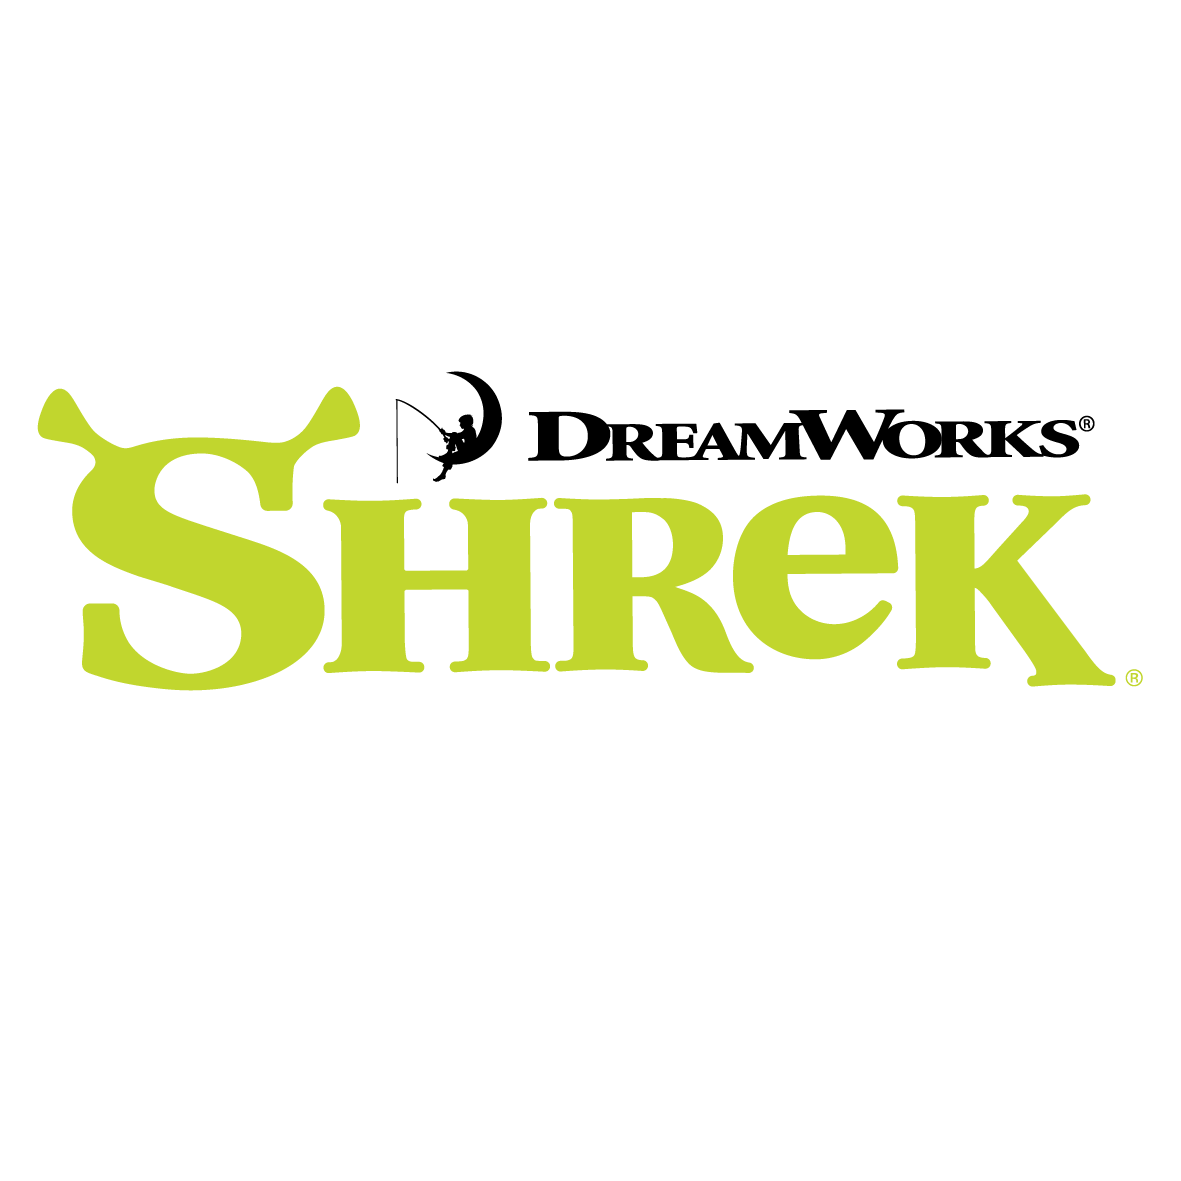 Shrek 2 Logo 10 Free Cliparts Download Images On Clip